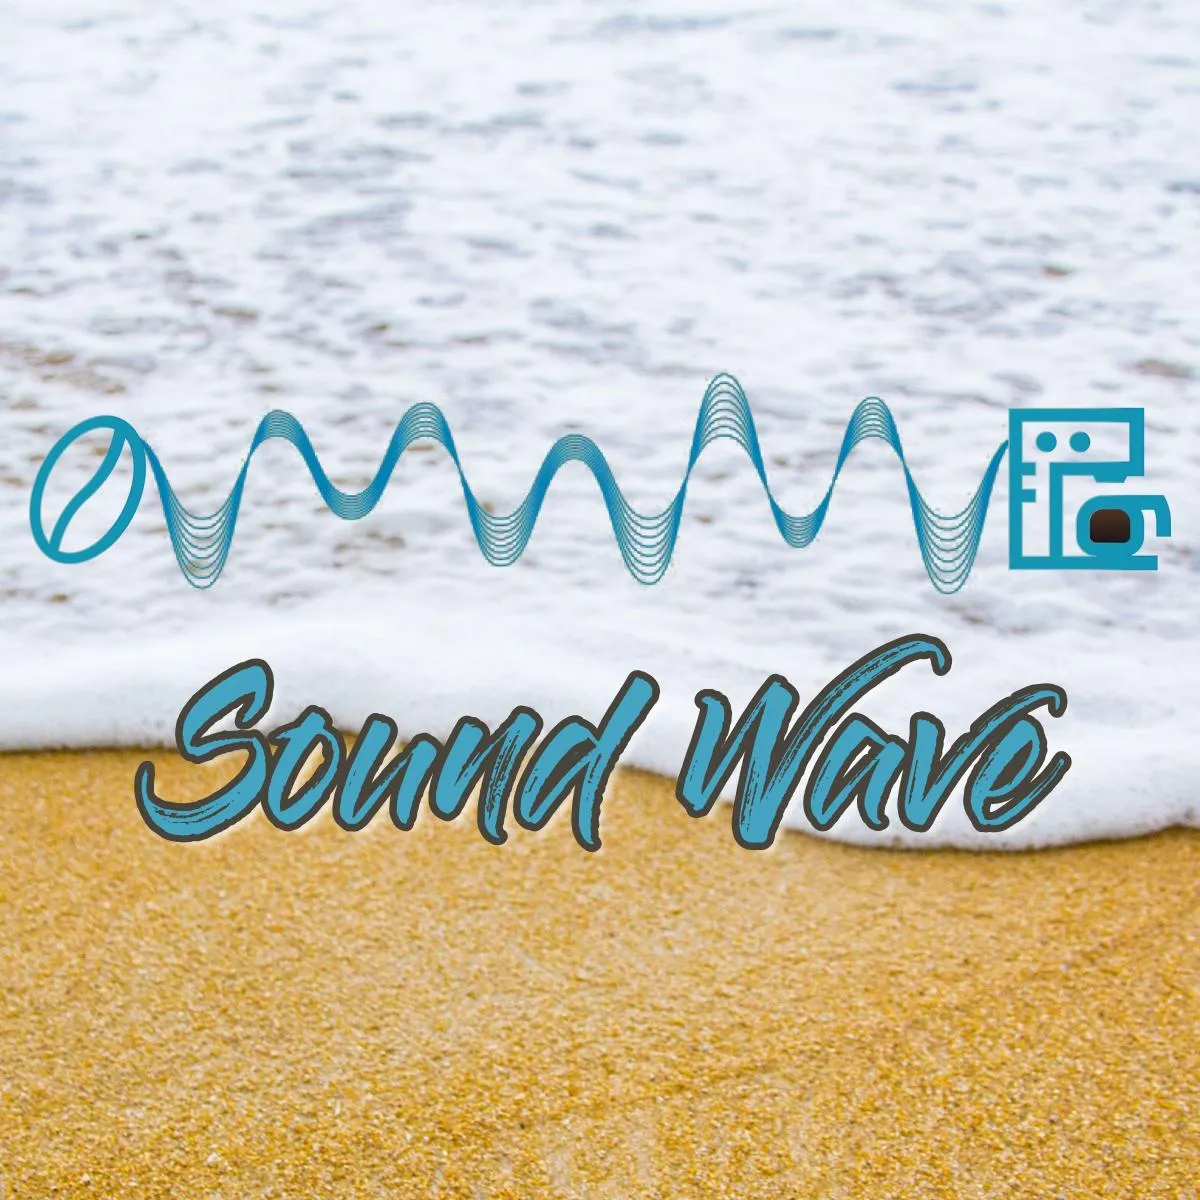  Sound Wave - Medium Roast